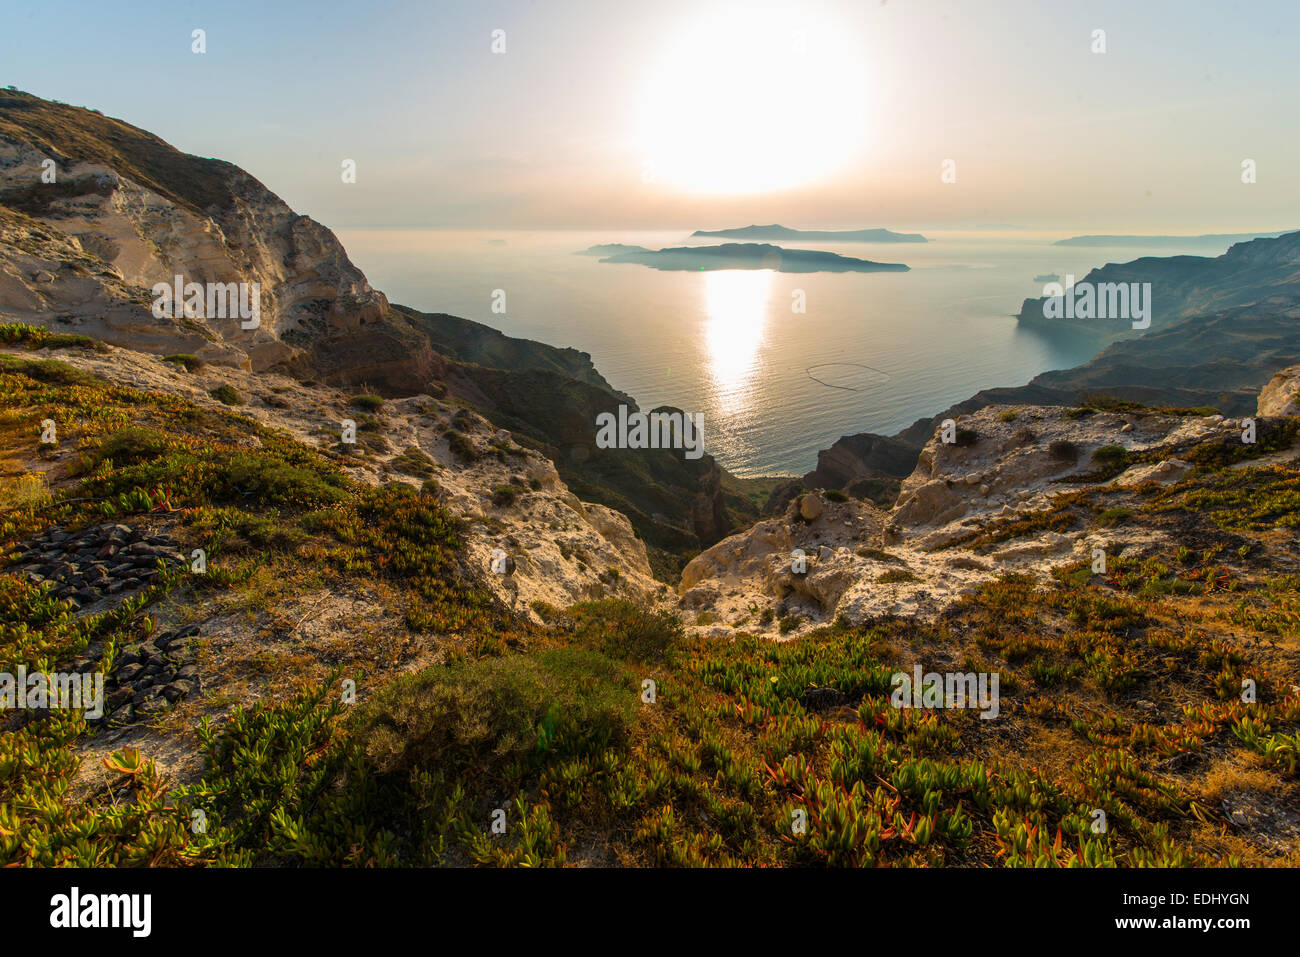 Nature landscape with view of the crater of Nea Kameni, sunset, Santorini, Cyclades, Aegean Sea, Greece Stock Photo